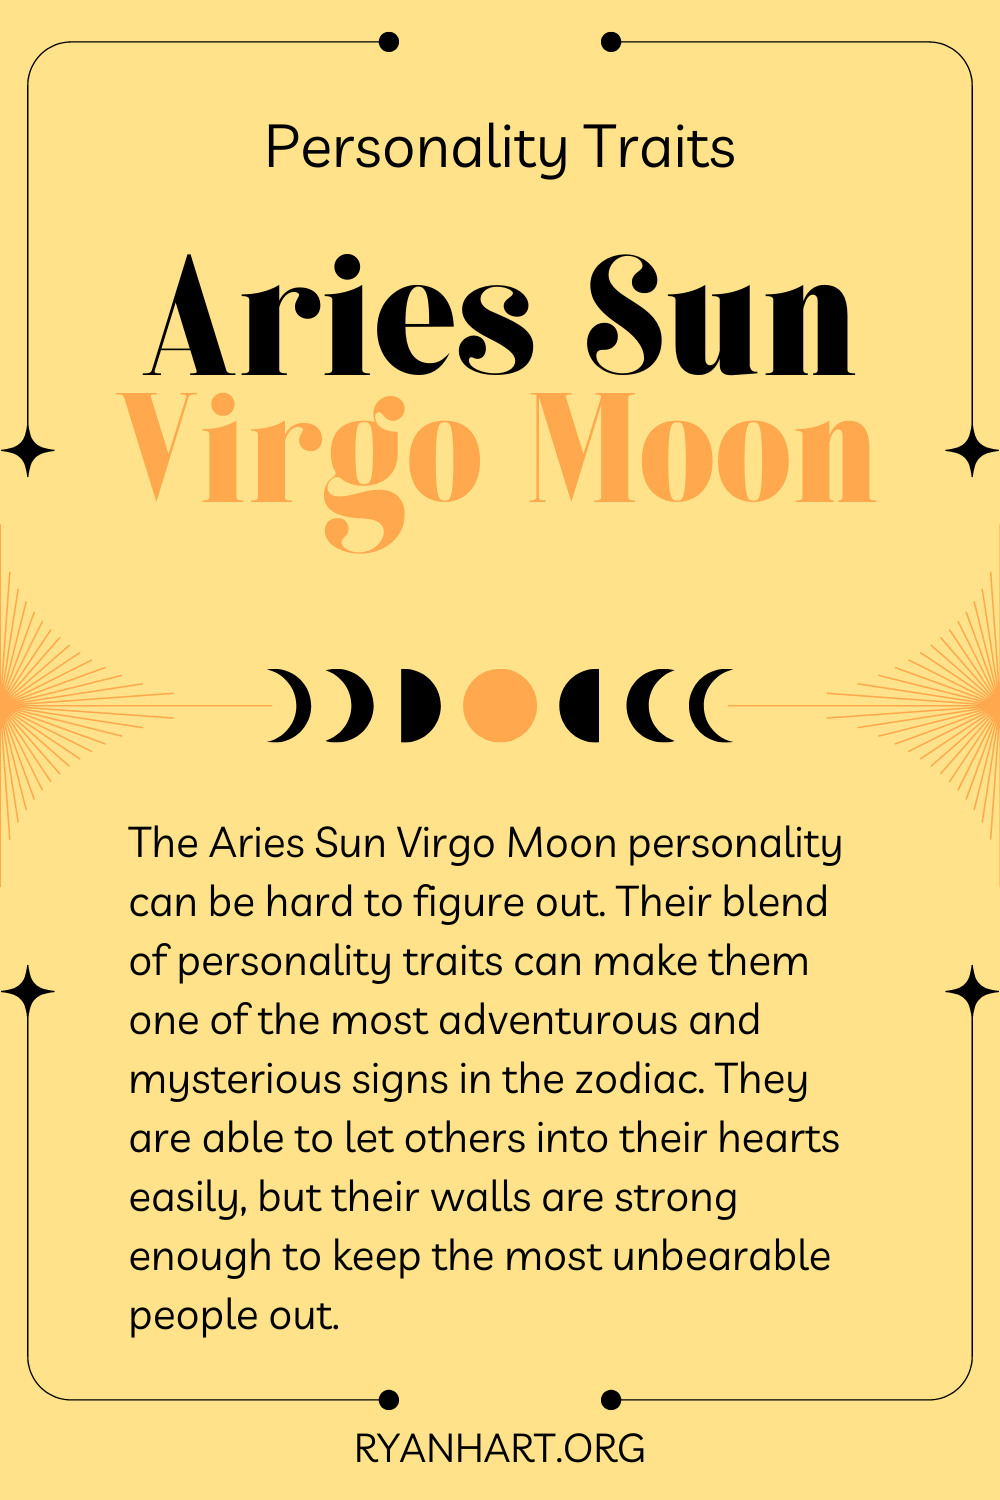  Ciri-ciri Kepribadian Aries Matahari Virgo Bulan